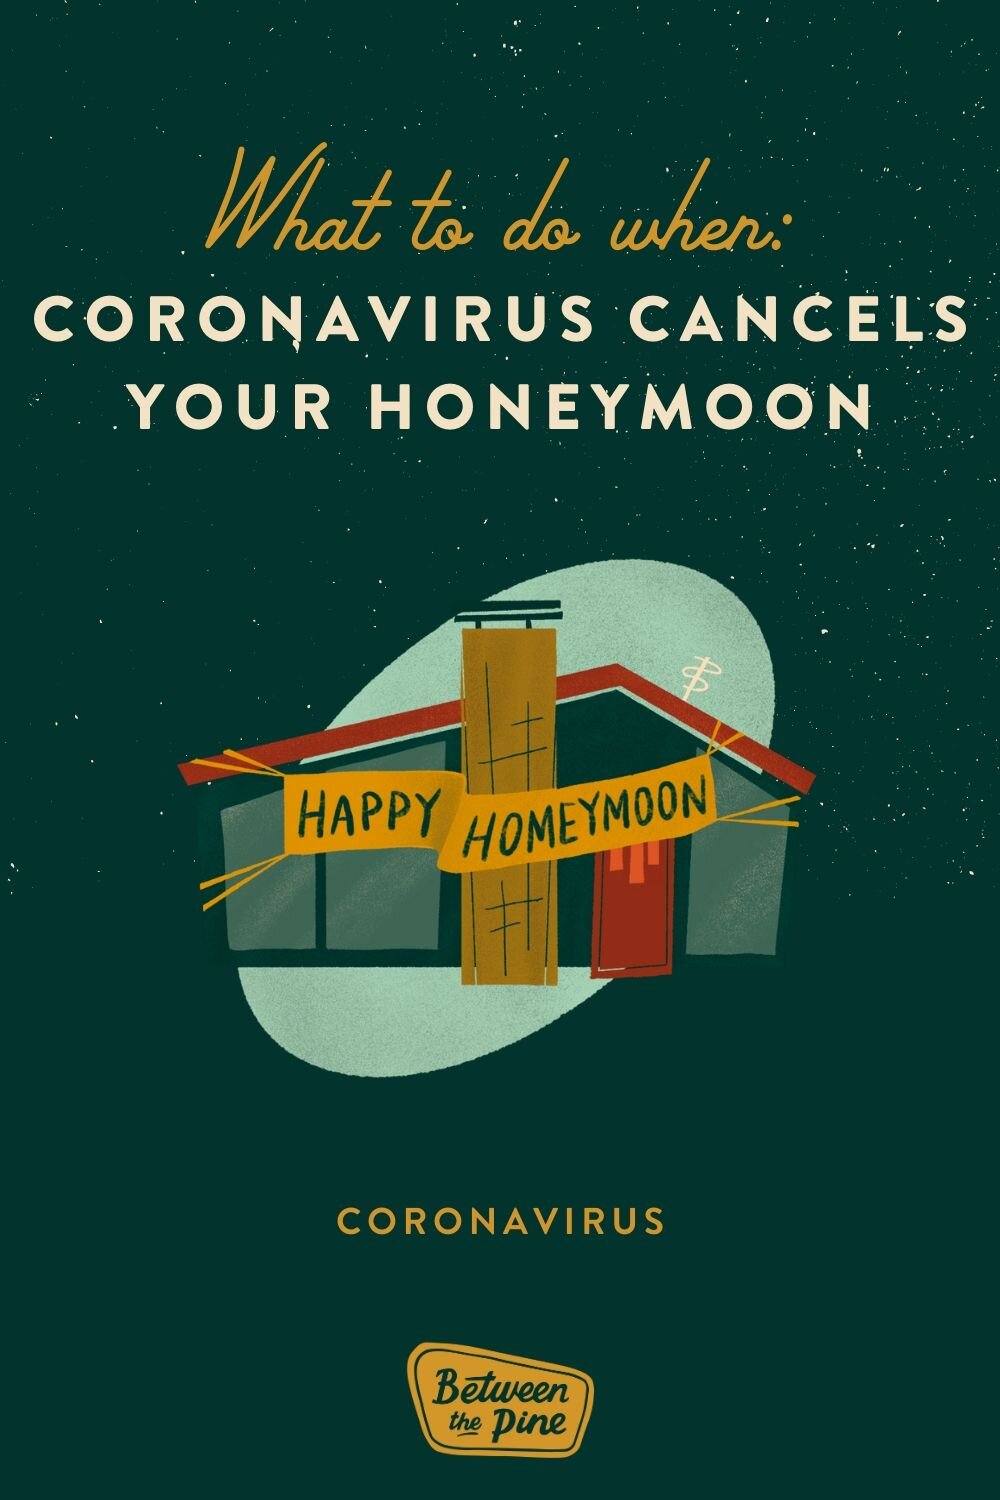 Coronavirus Honeymoon | Between the Pine Adventure Wedding and Elopement Photographer